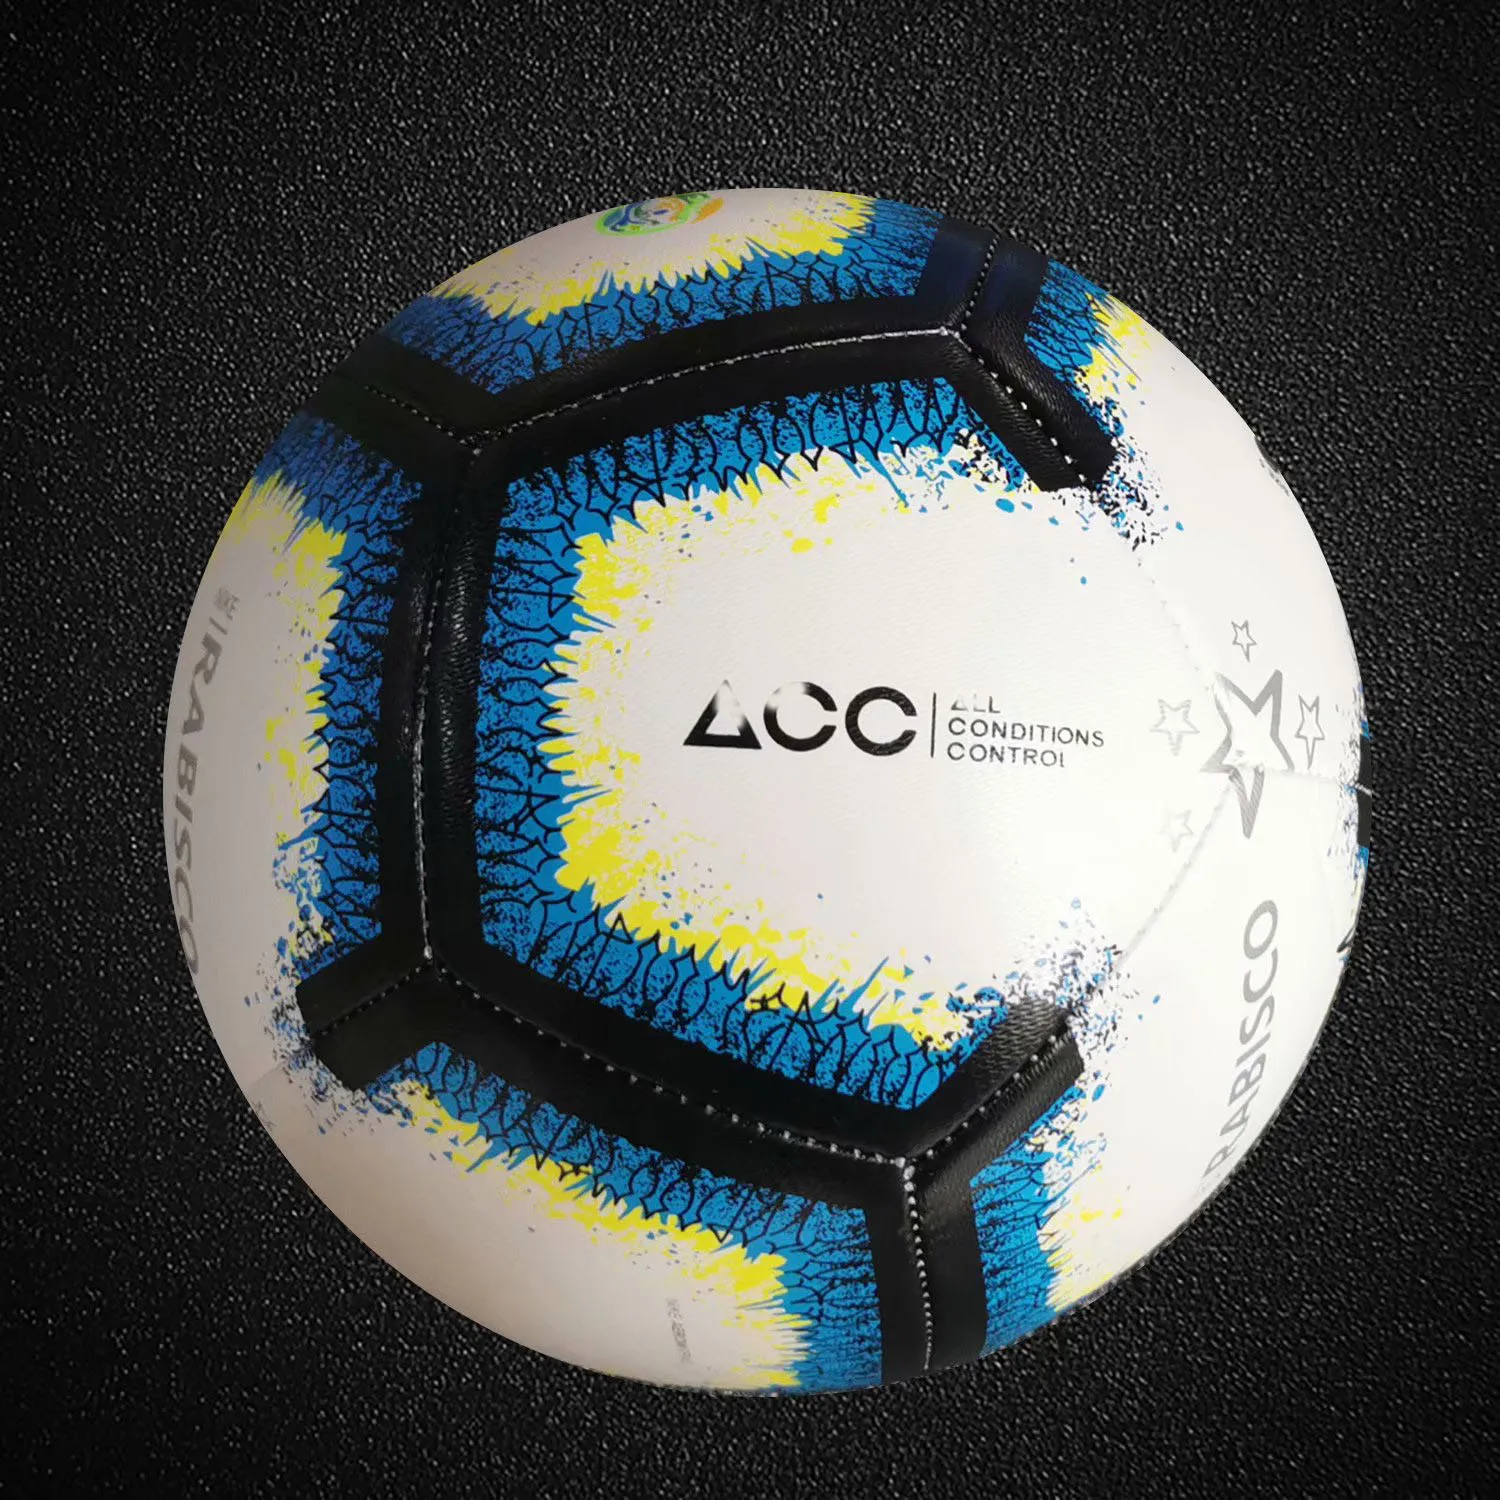 quality European Cup Soccer ball 2020 pu size 5 balls granules slipresistant football high quality ball Eu9368989